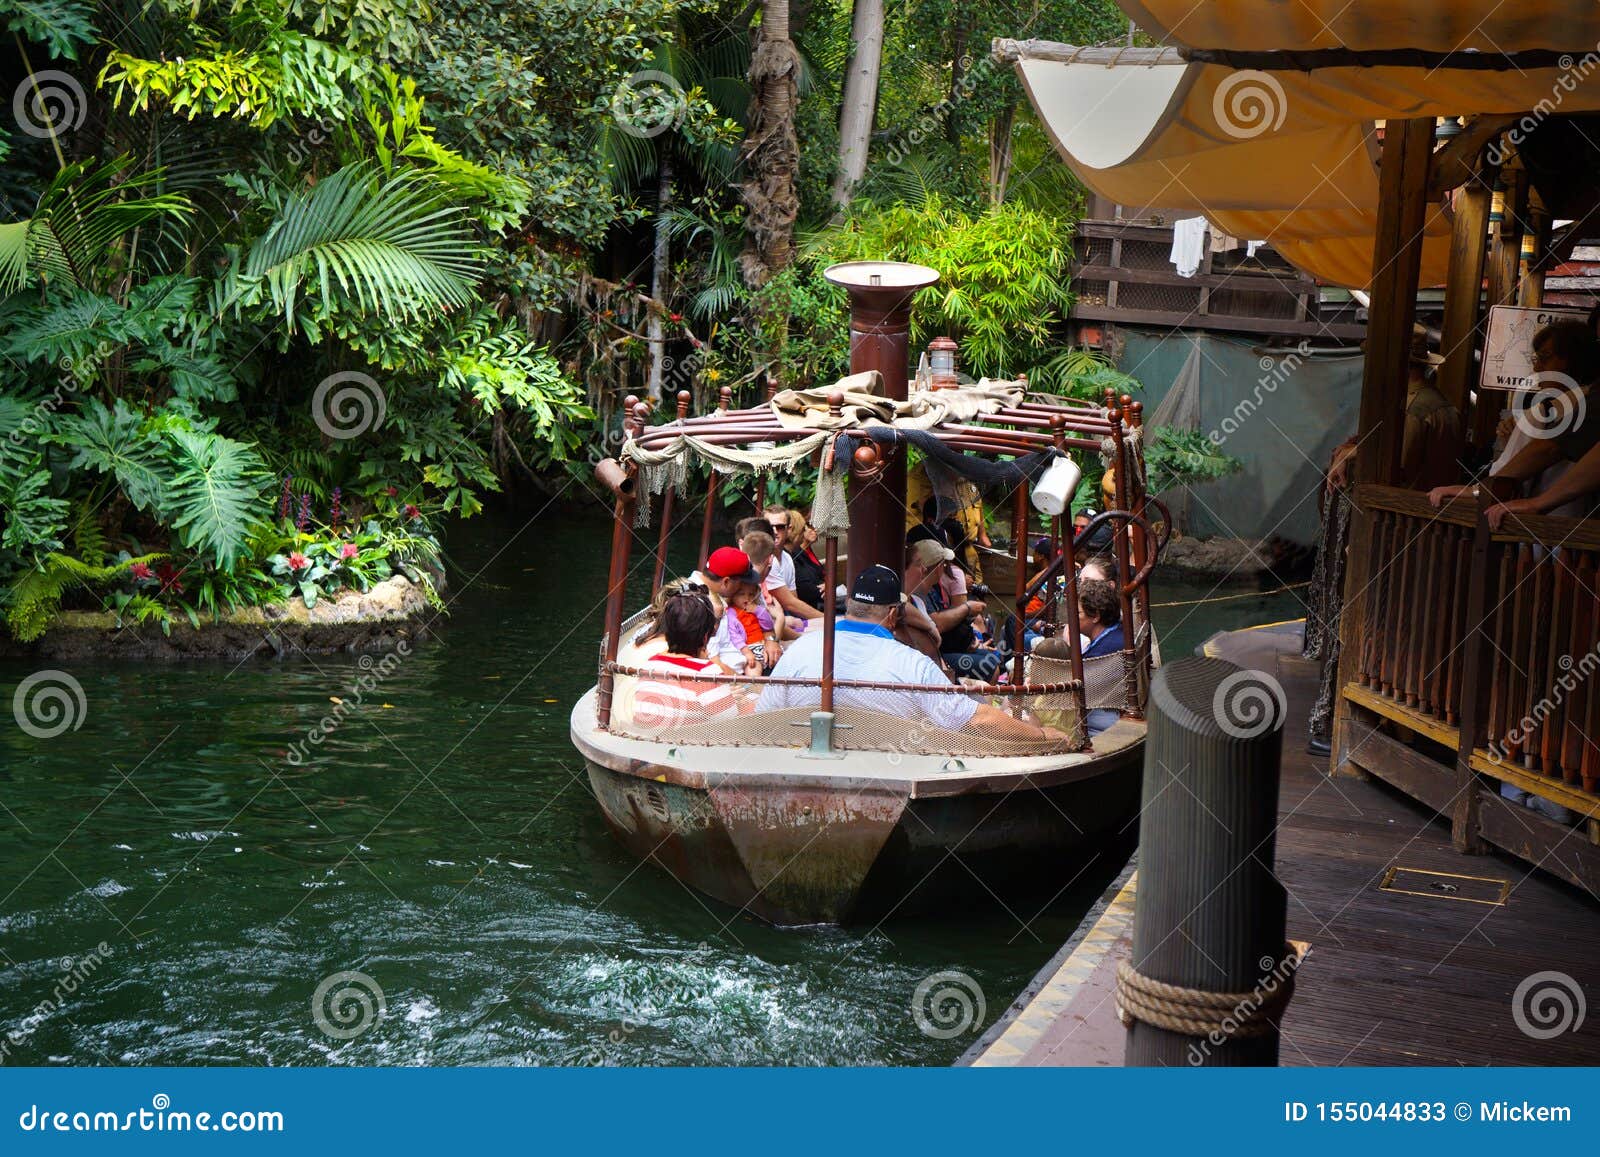 Disney Jungle Cruise Boat Disneyland Ride Editorial Stock Photo Image Of California Castle 155044833